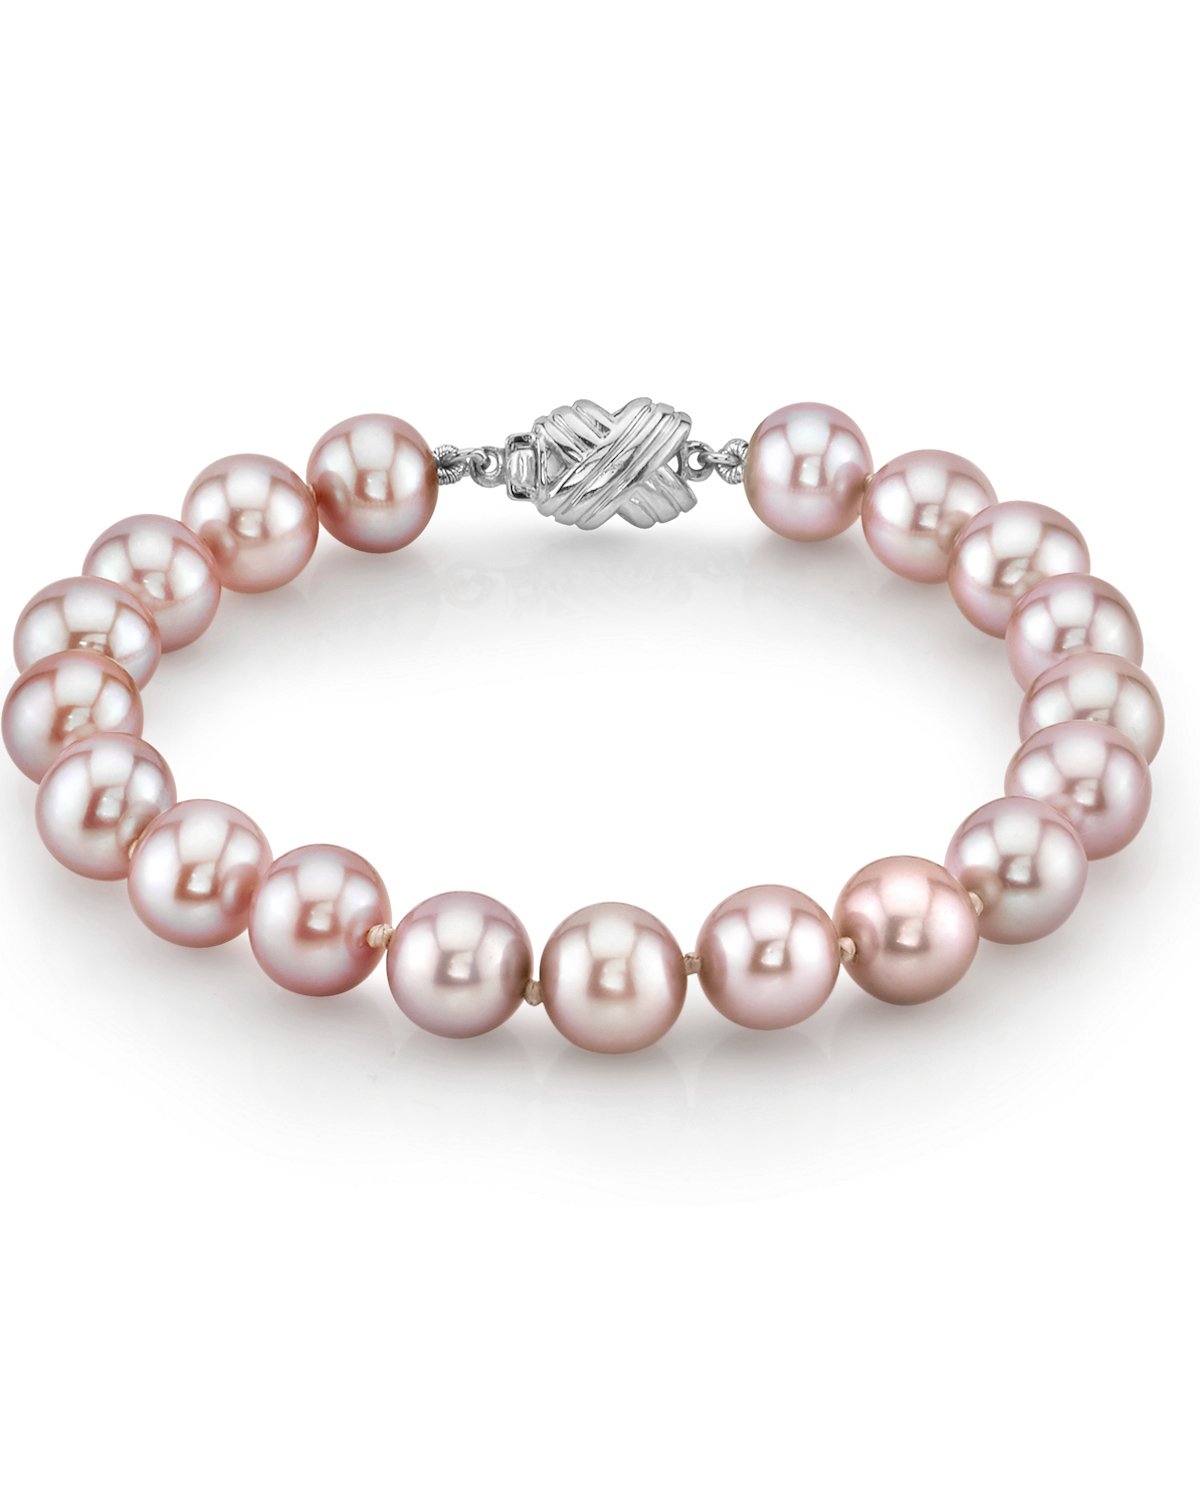 Regal  Subtle 45mm Lavender Oval Pearls Bracelet  Pure Pearls